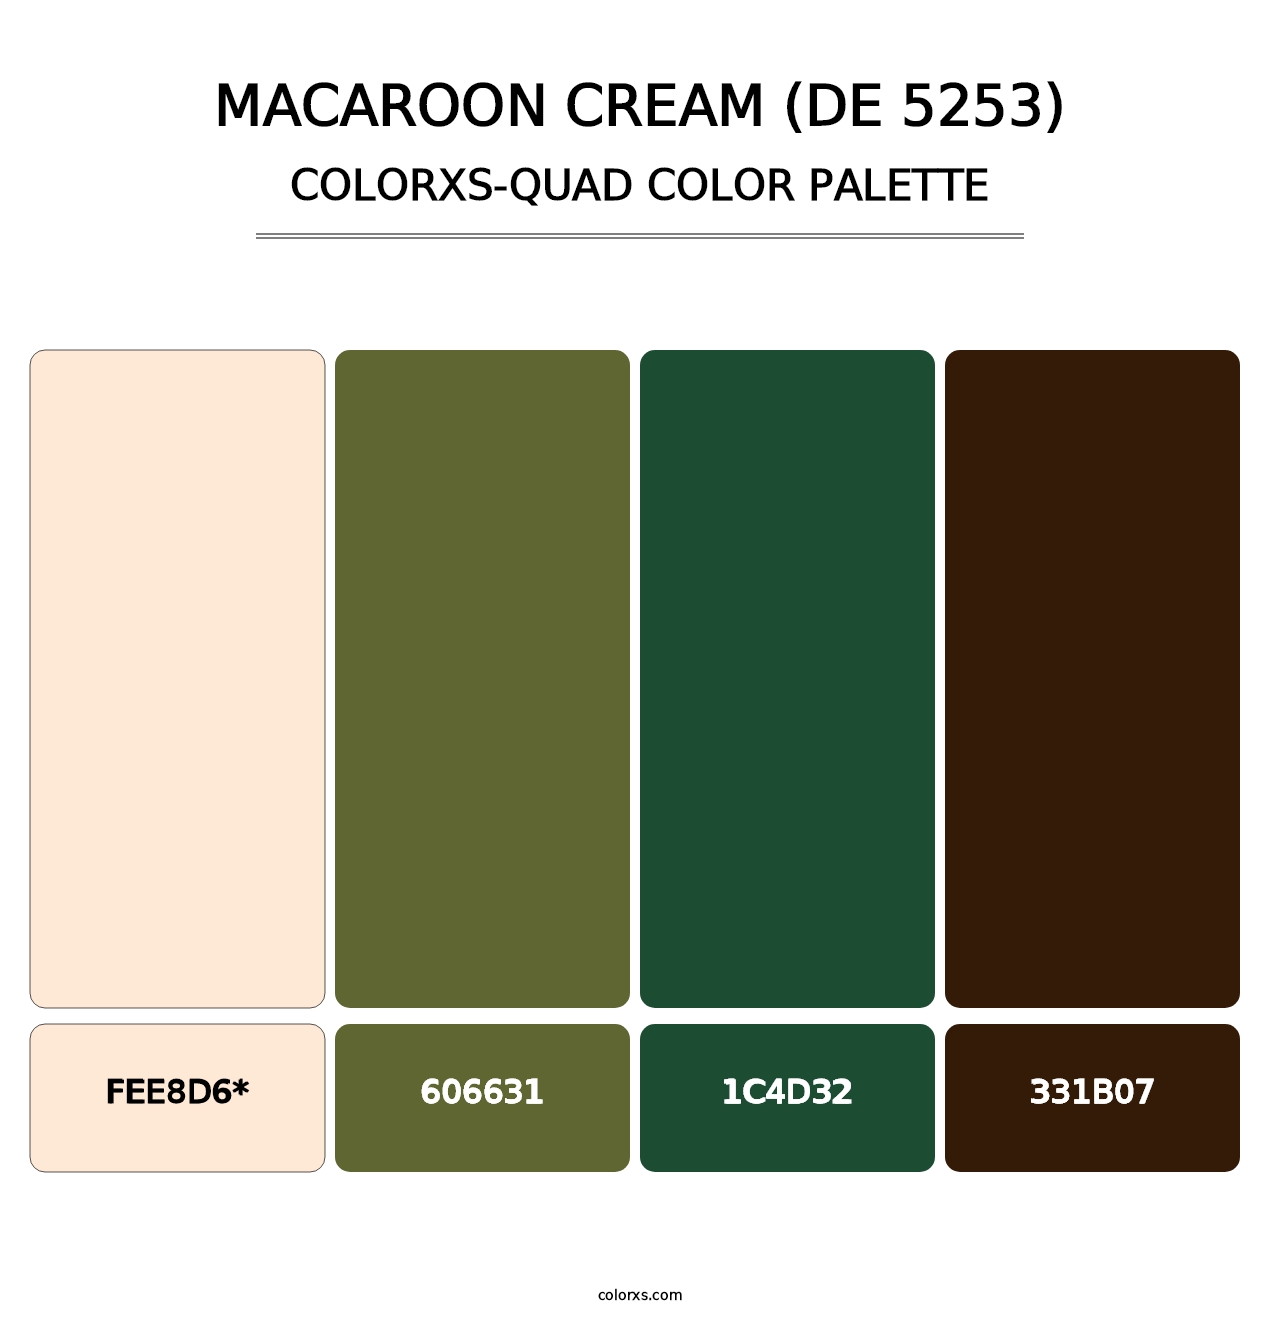 Macaroon Cream (DE 5253) - Colorxs Quad Palette